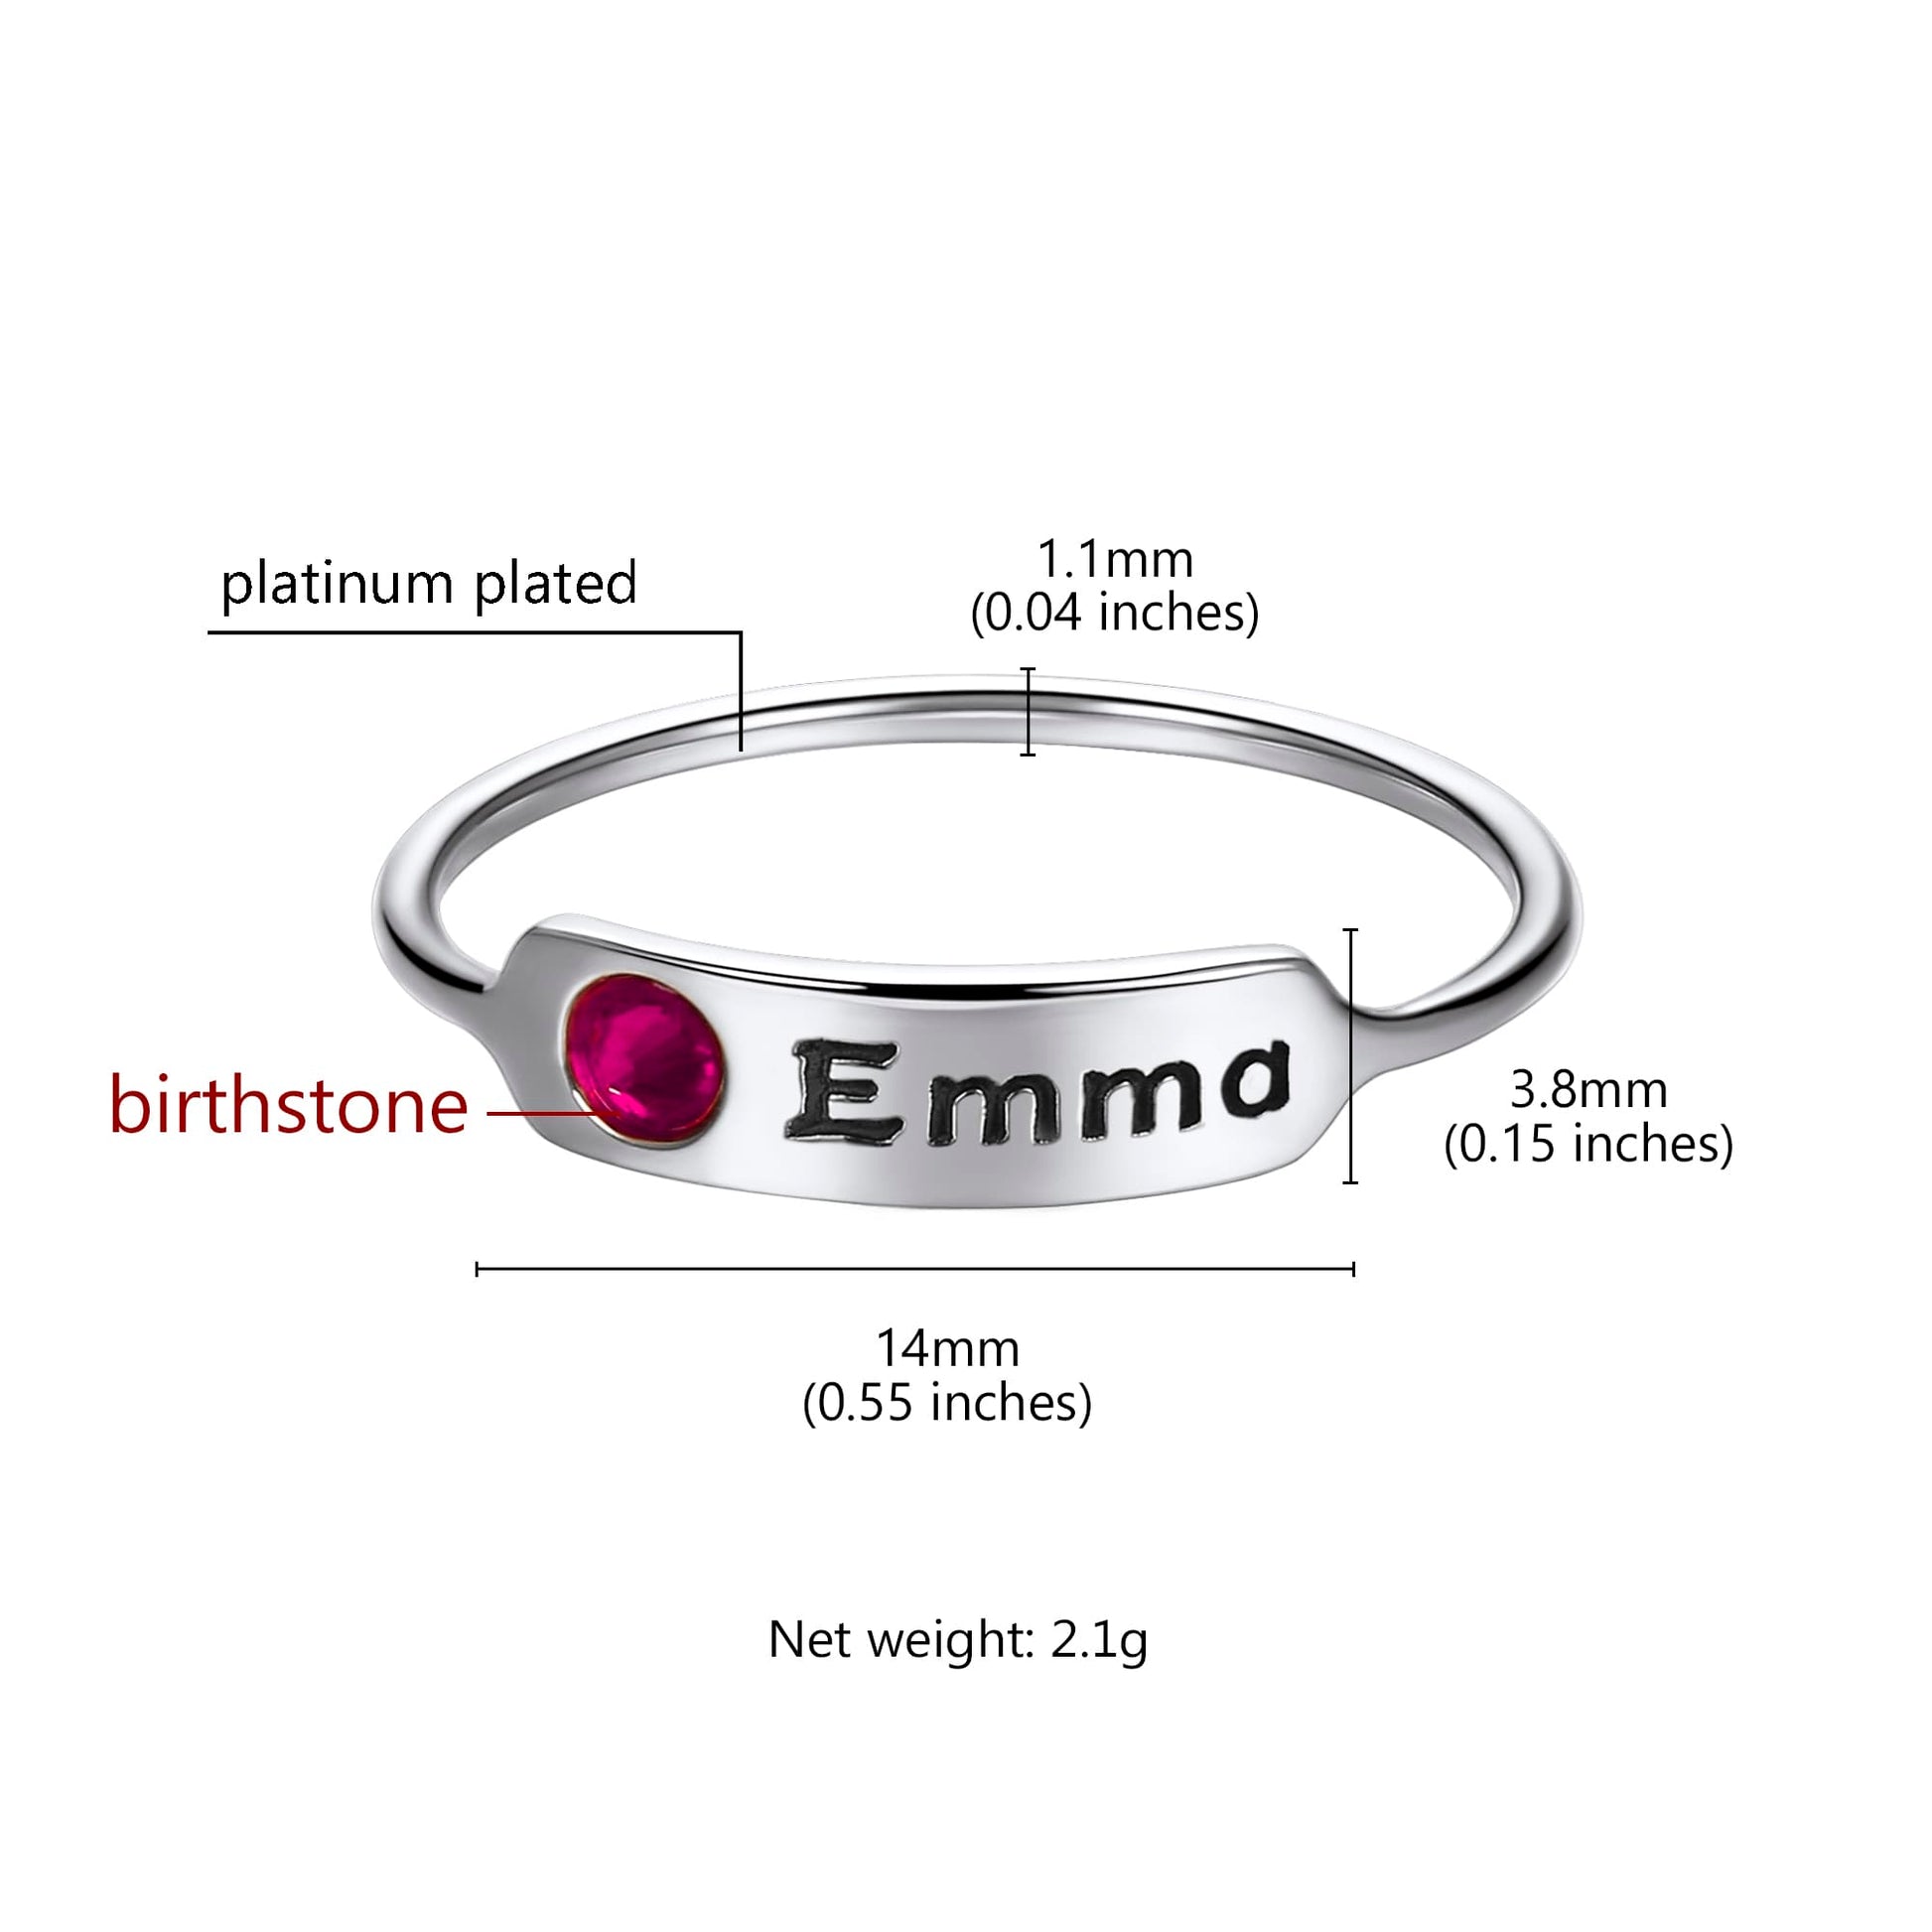 Birthstonesjewelry Birthstone Name Ring Size